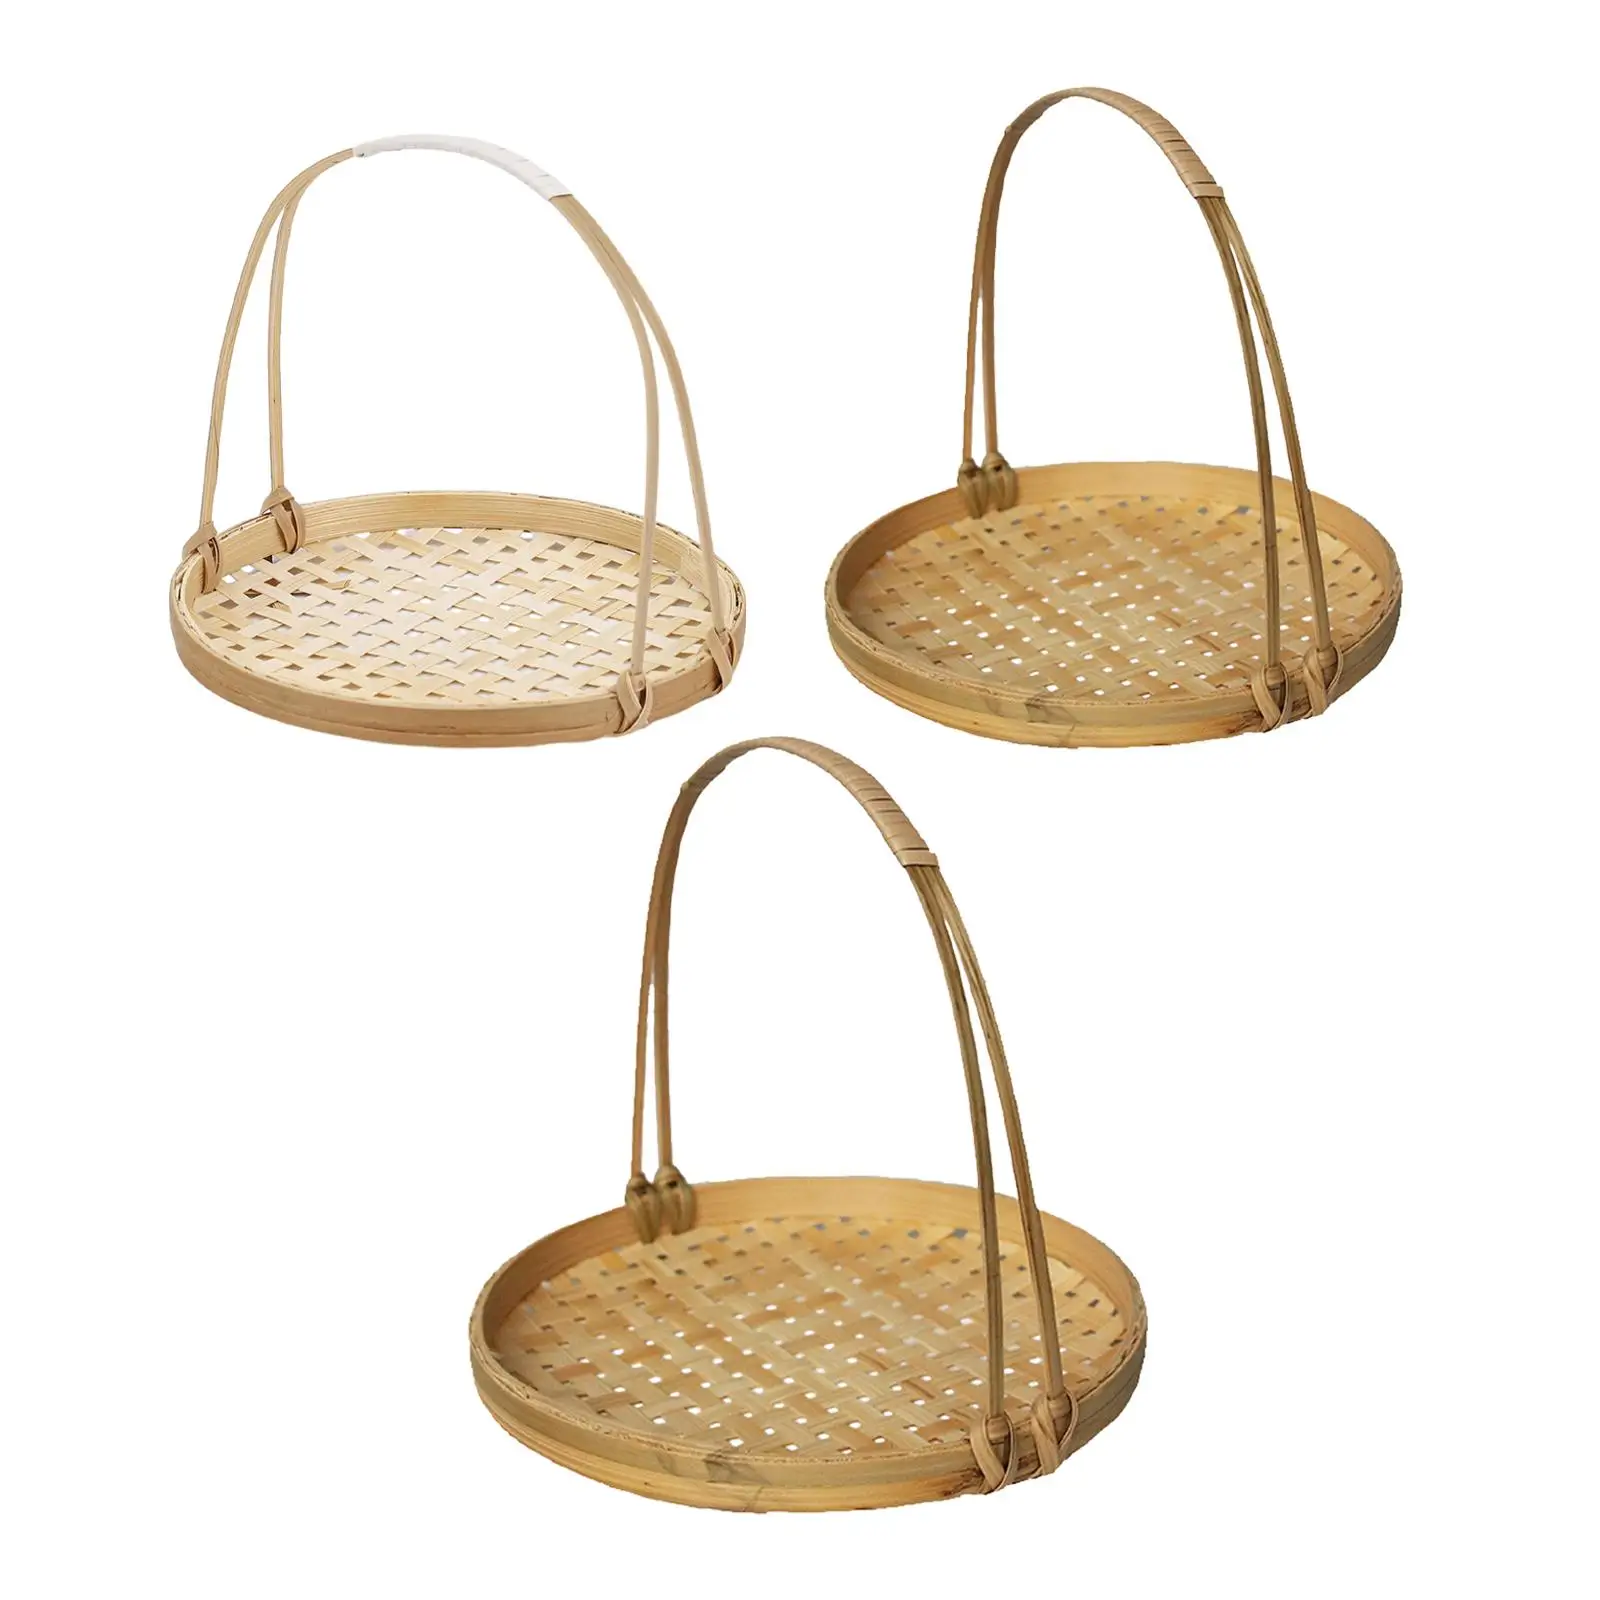 Hand Woven Fruit Basket Organizer Rattan Decorative Farmhosue Multipurpose with